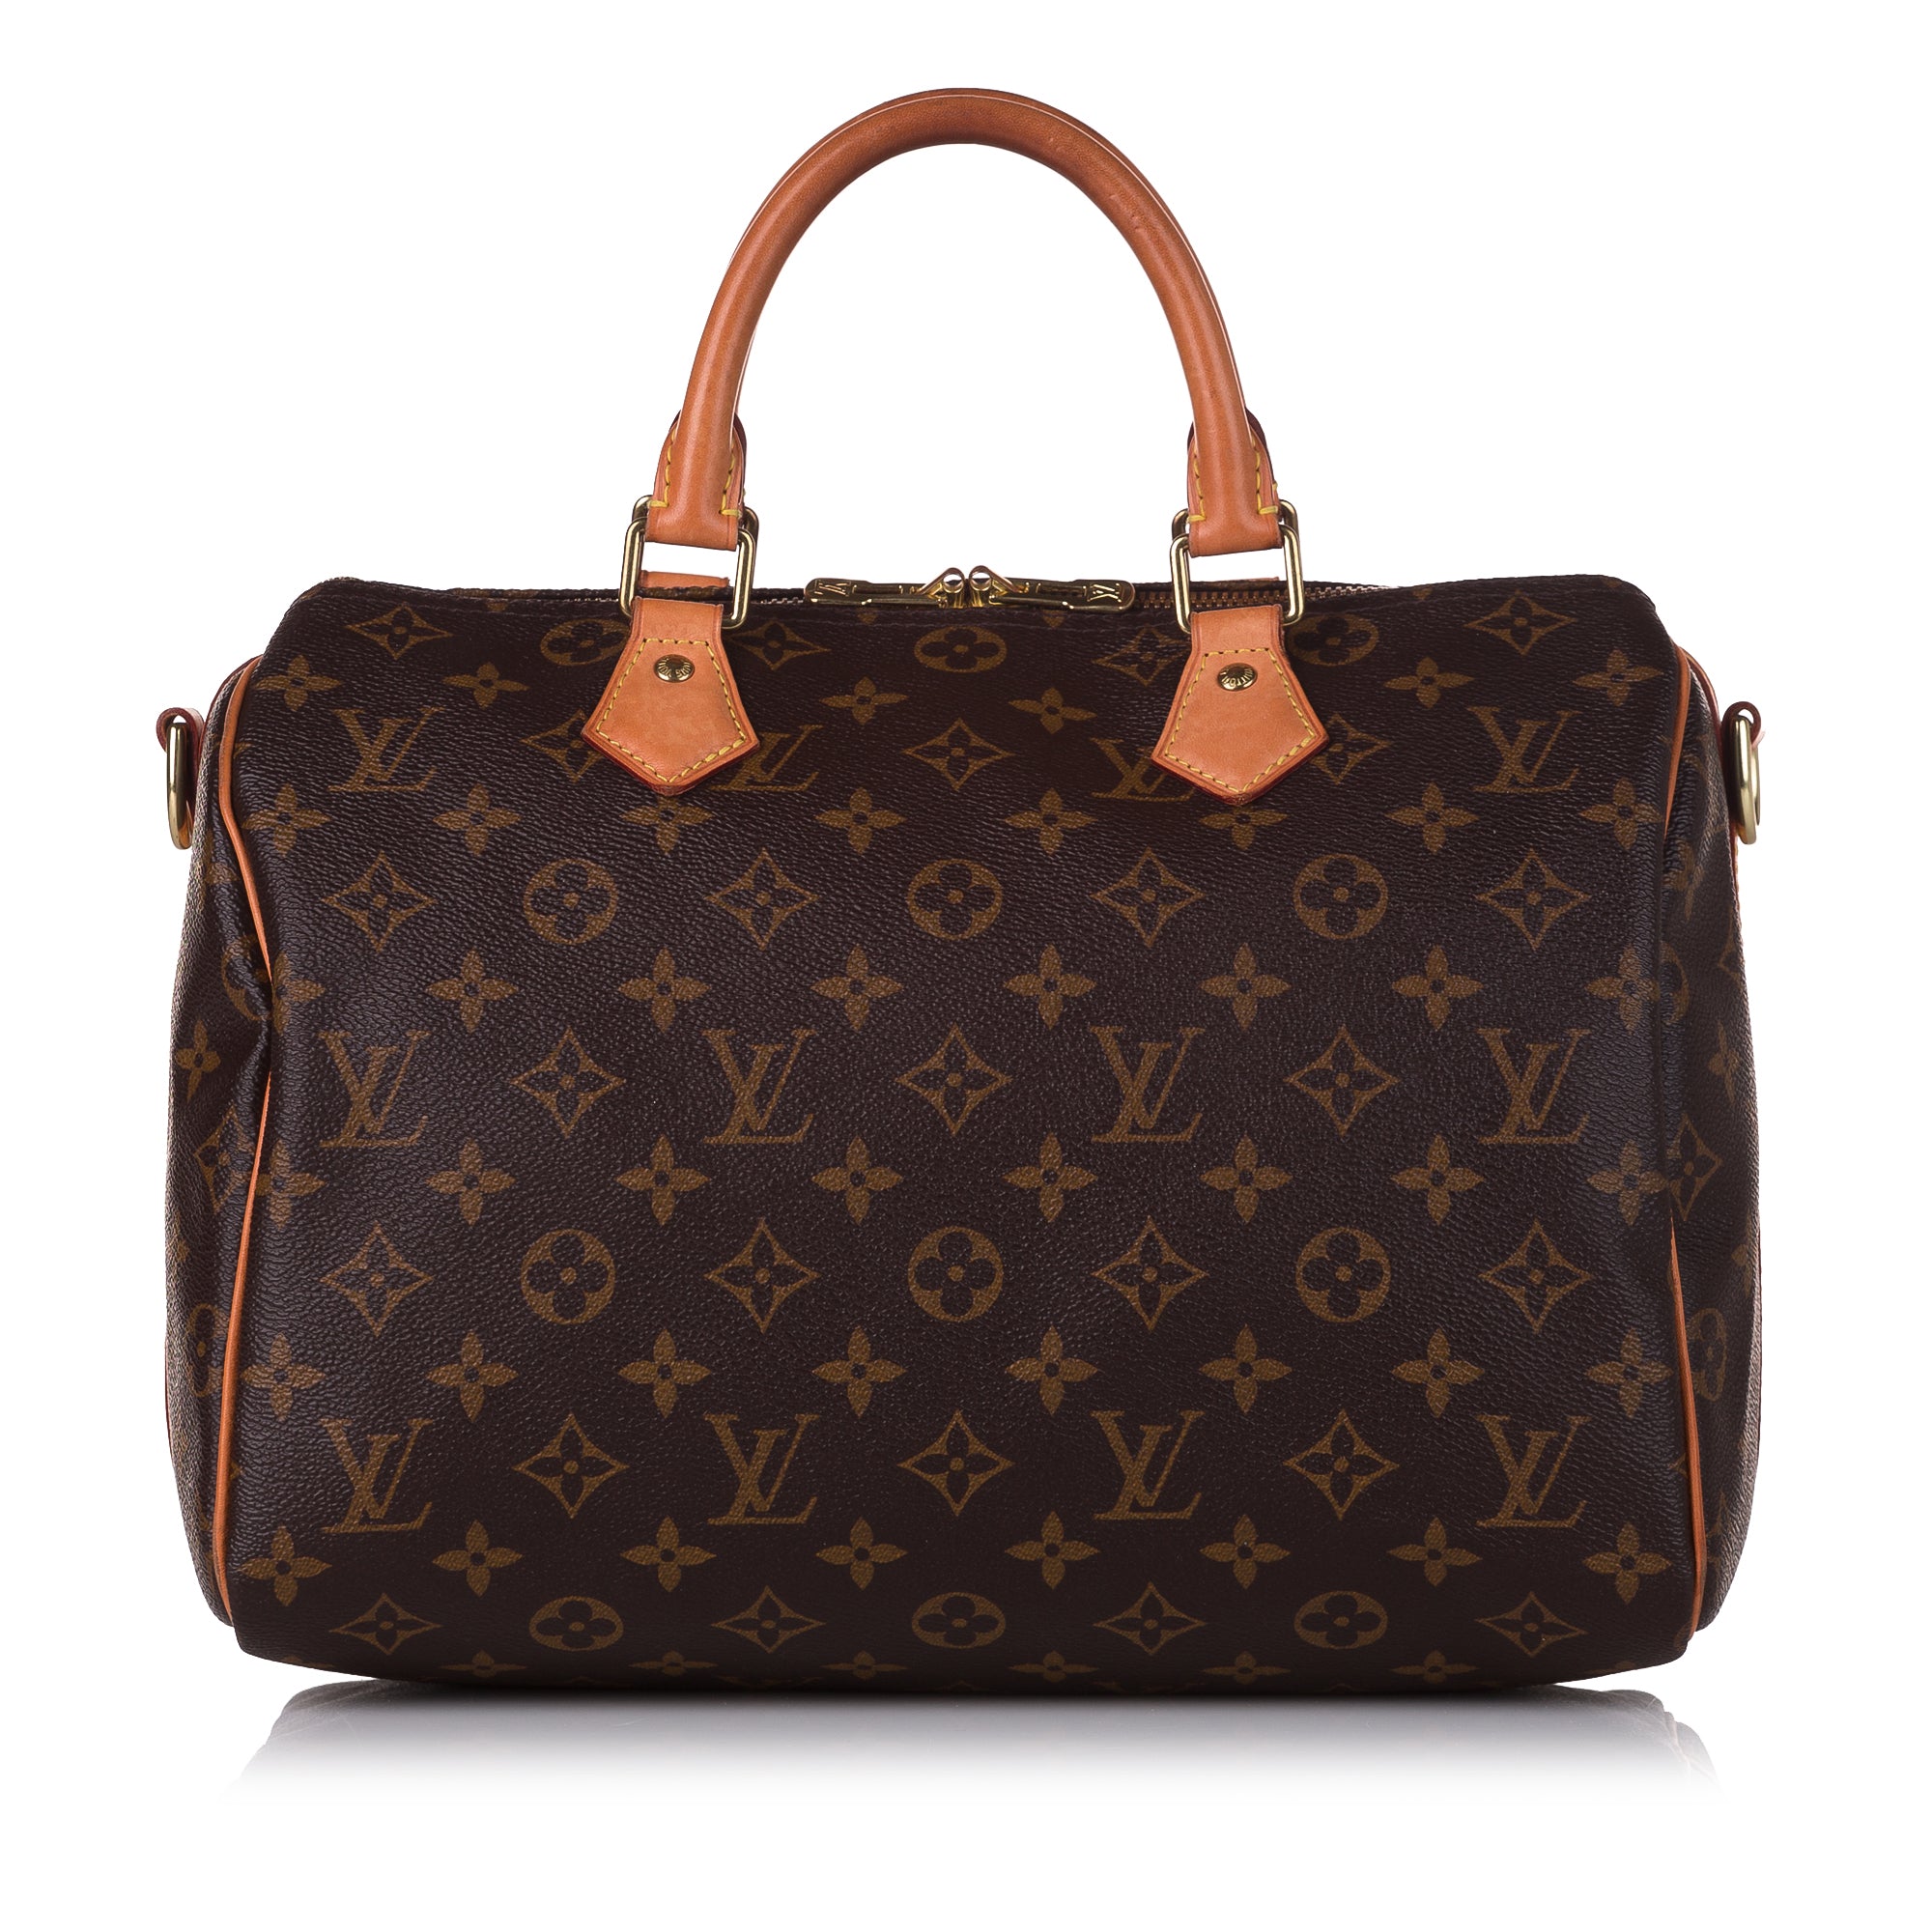 Authentic Louis Vuitton Speedy 30 Bandouliere Monogram Bag Purse With Adj  Strap  eBay